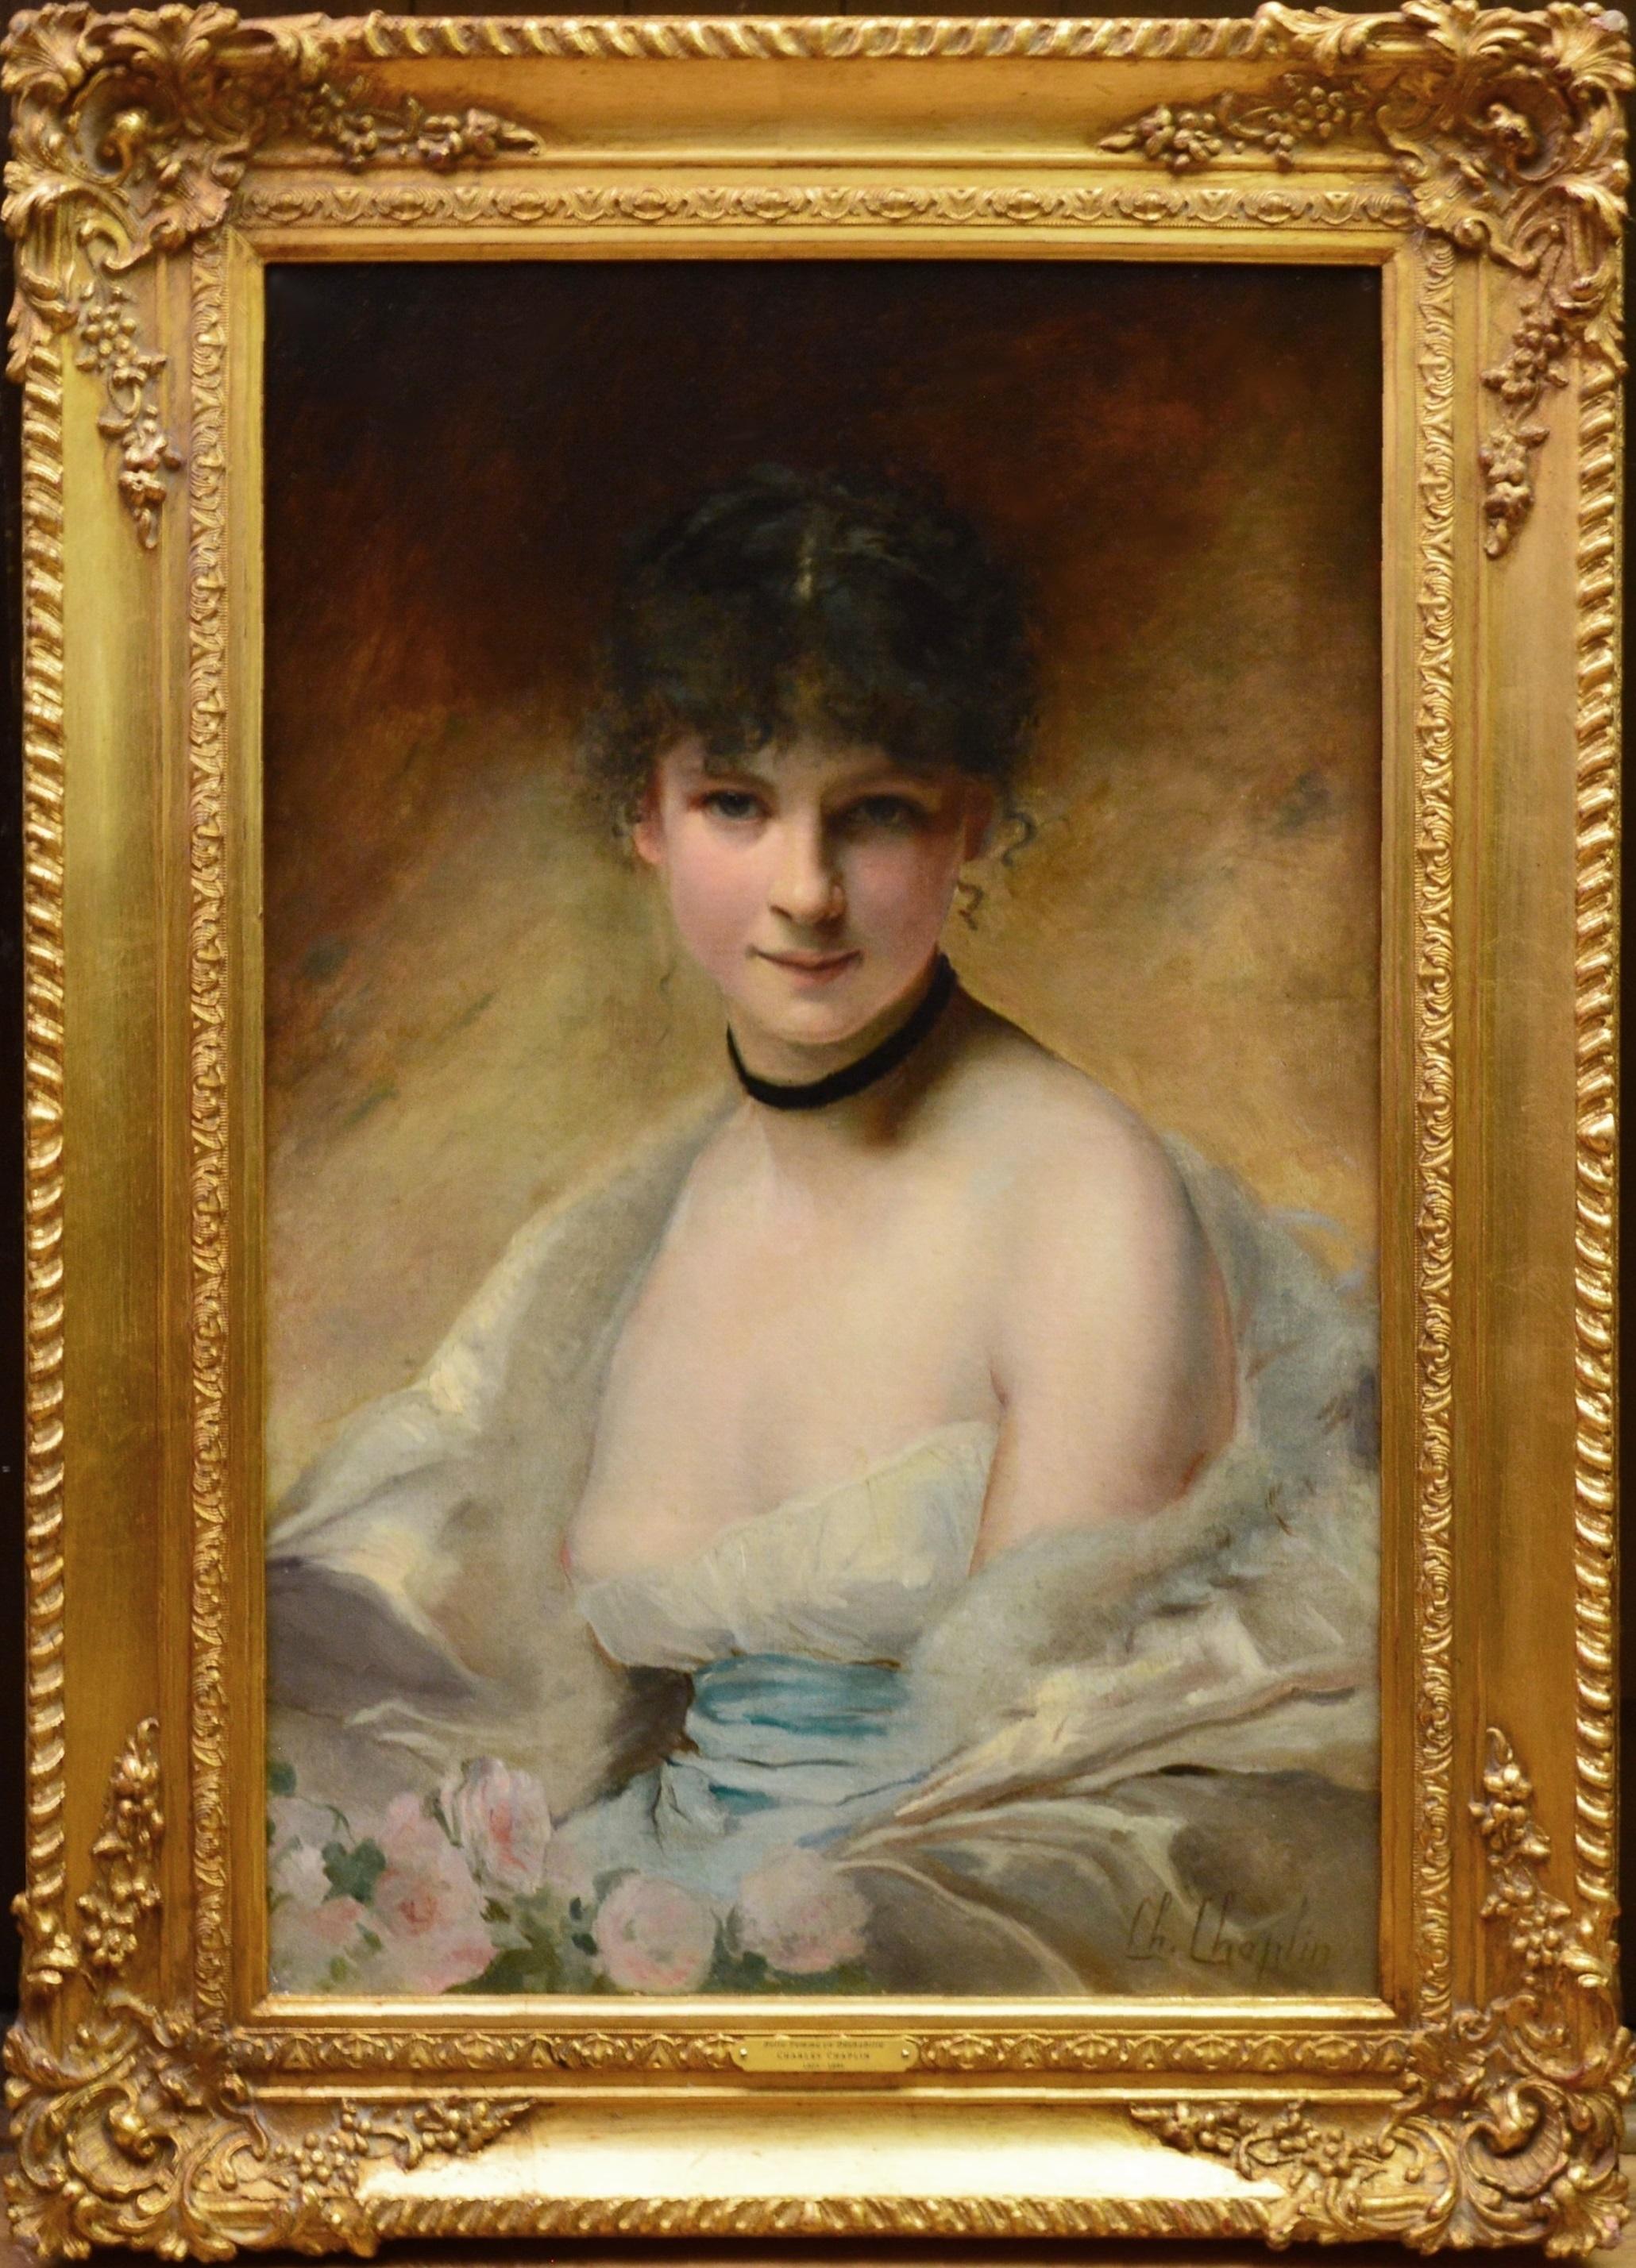 Charles Joshua Chaplin Portrait Painting - Belle Femme en Déshabillé - 19th Century French Portrait of Young Society Beauty